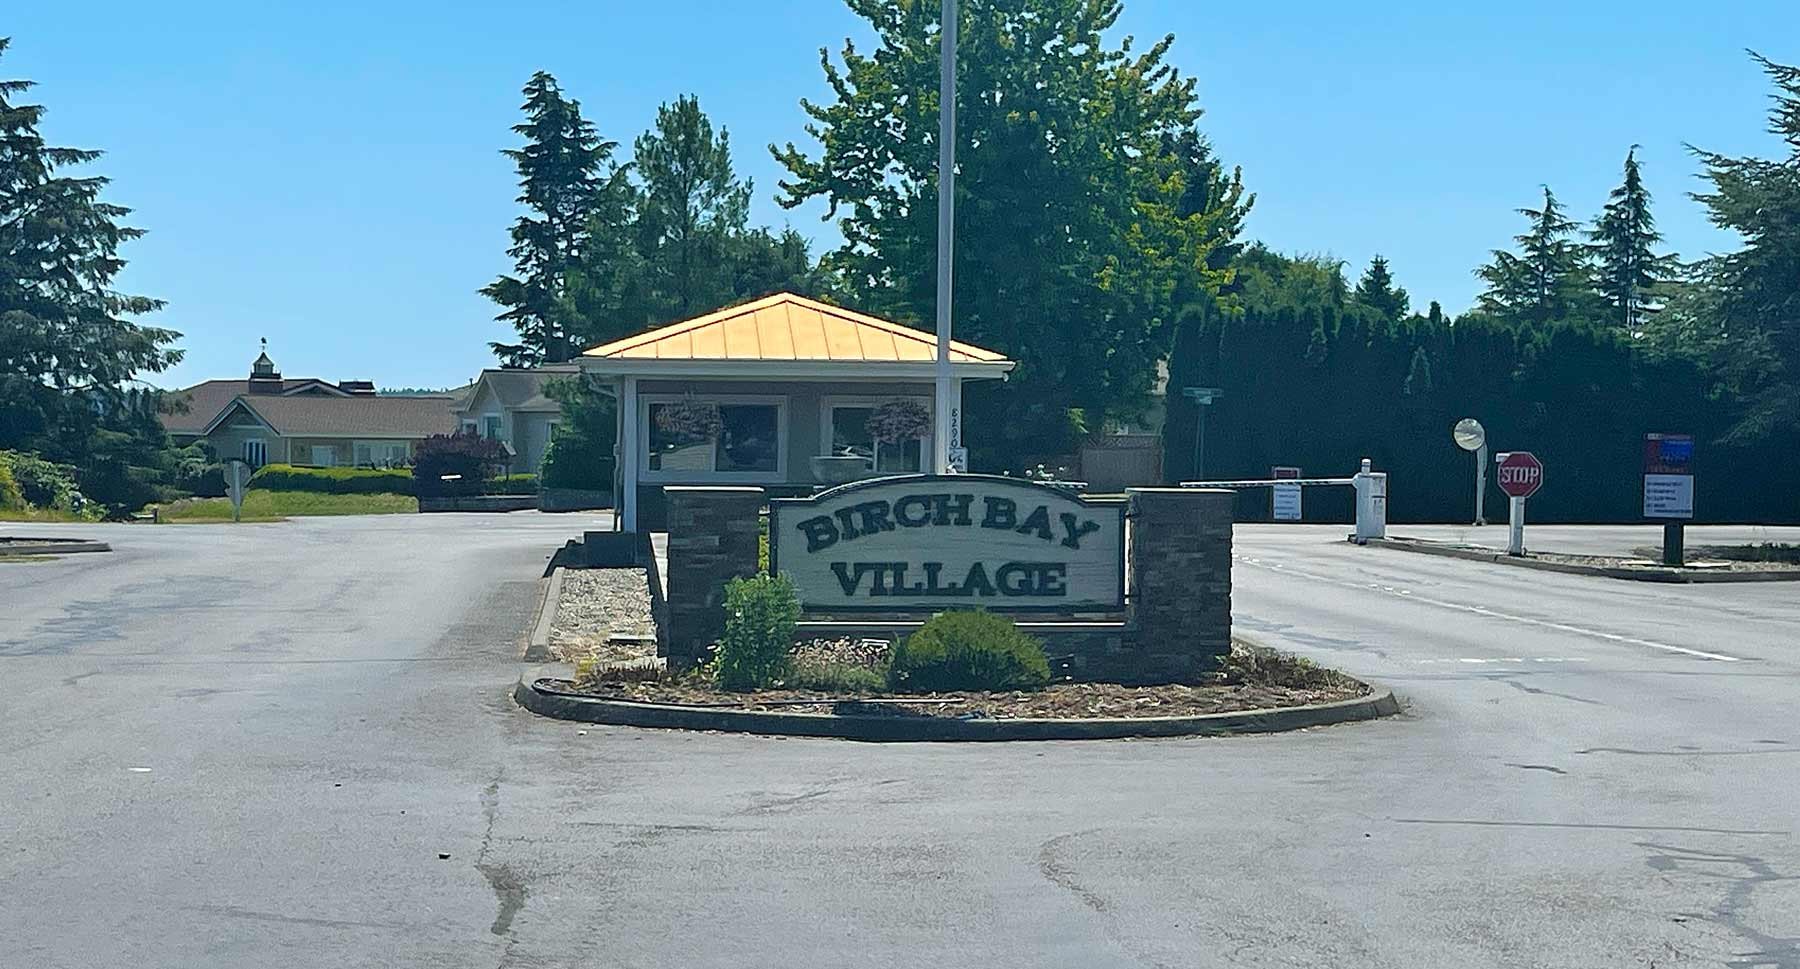 Birch-bay-Village-gated-community-entrance